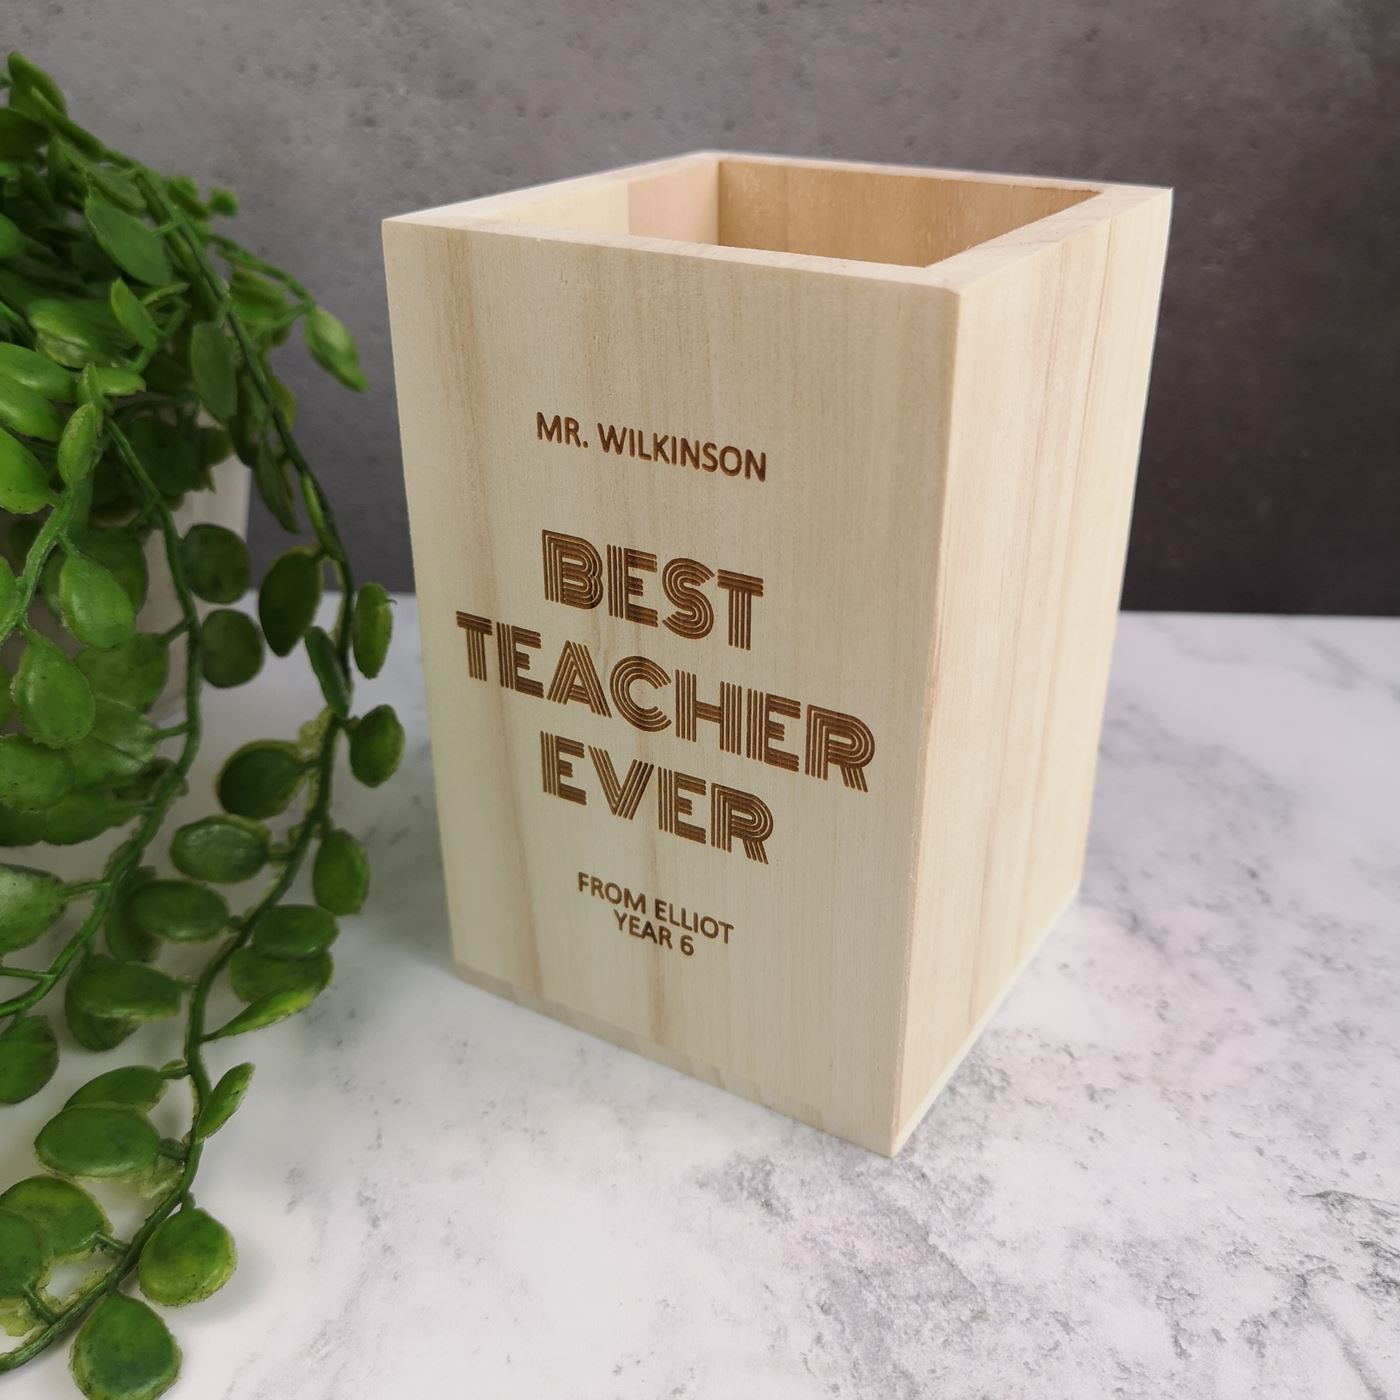 Personalised Wooden Pen Pot - Best Teacher